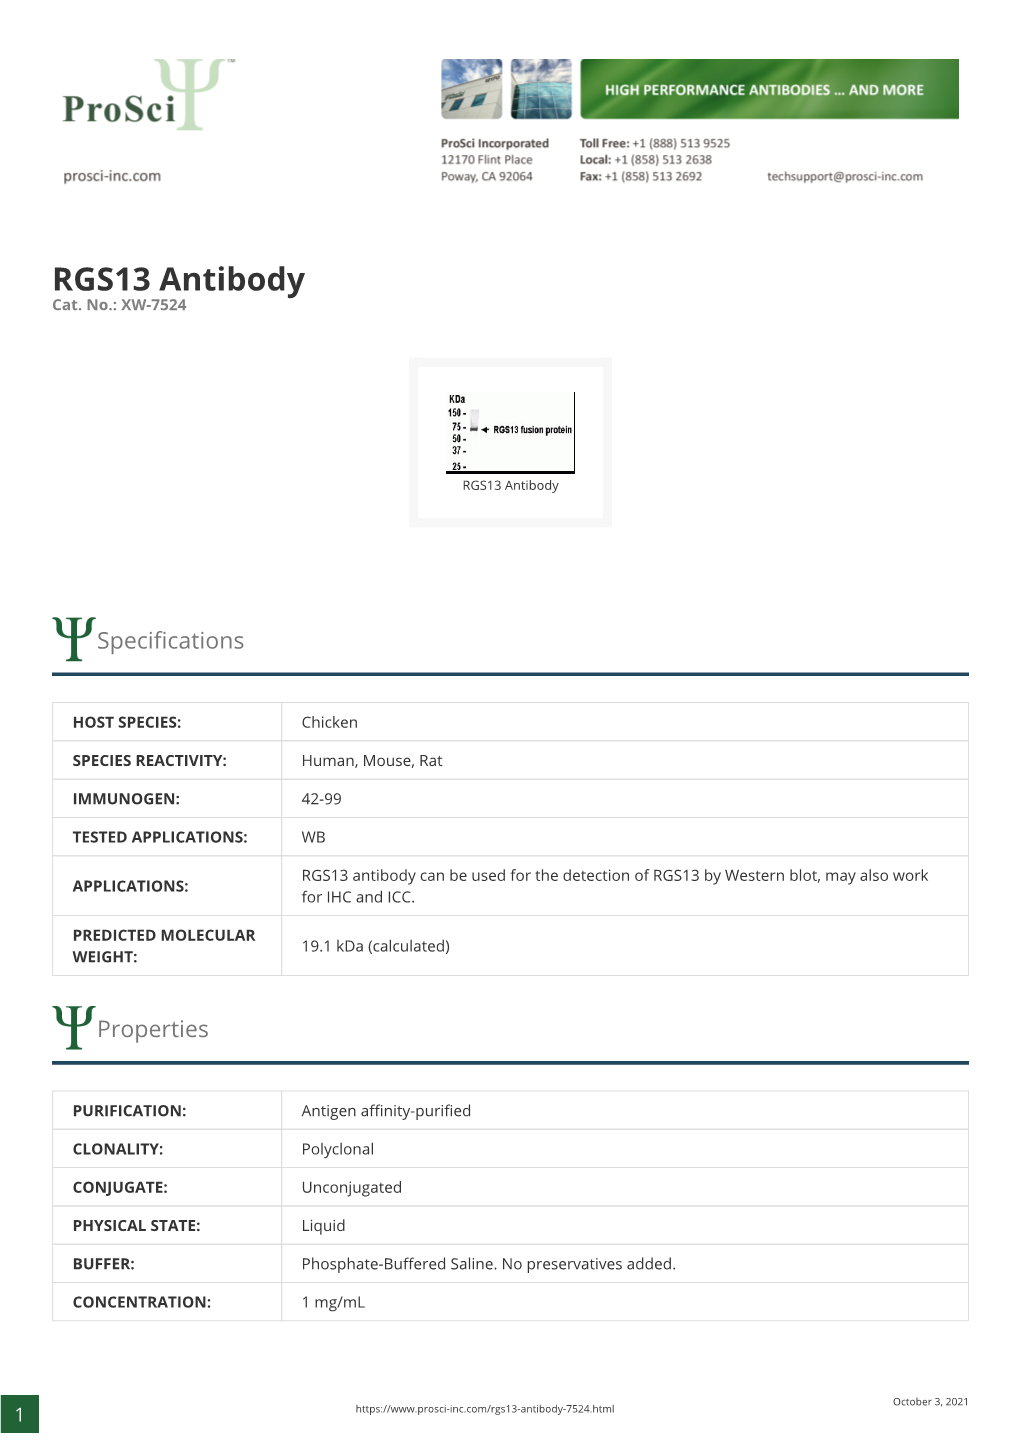 RGS13 Antibody Cat